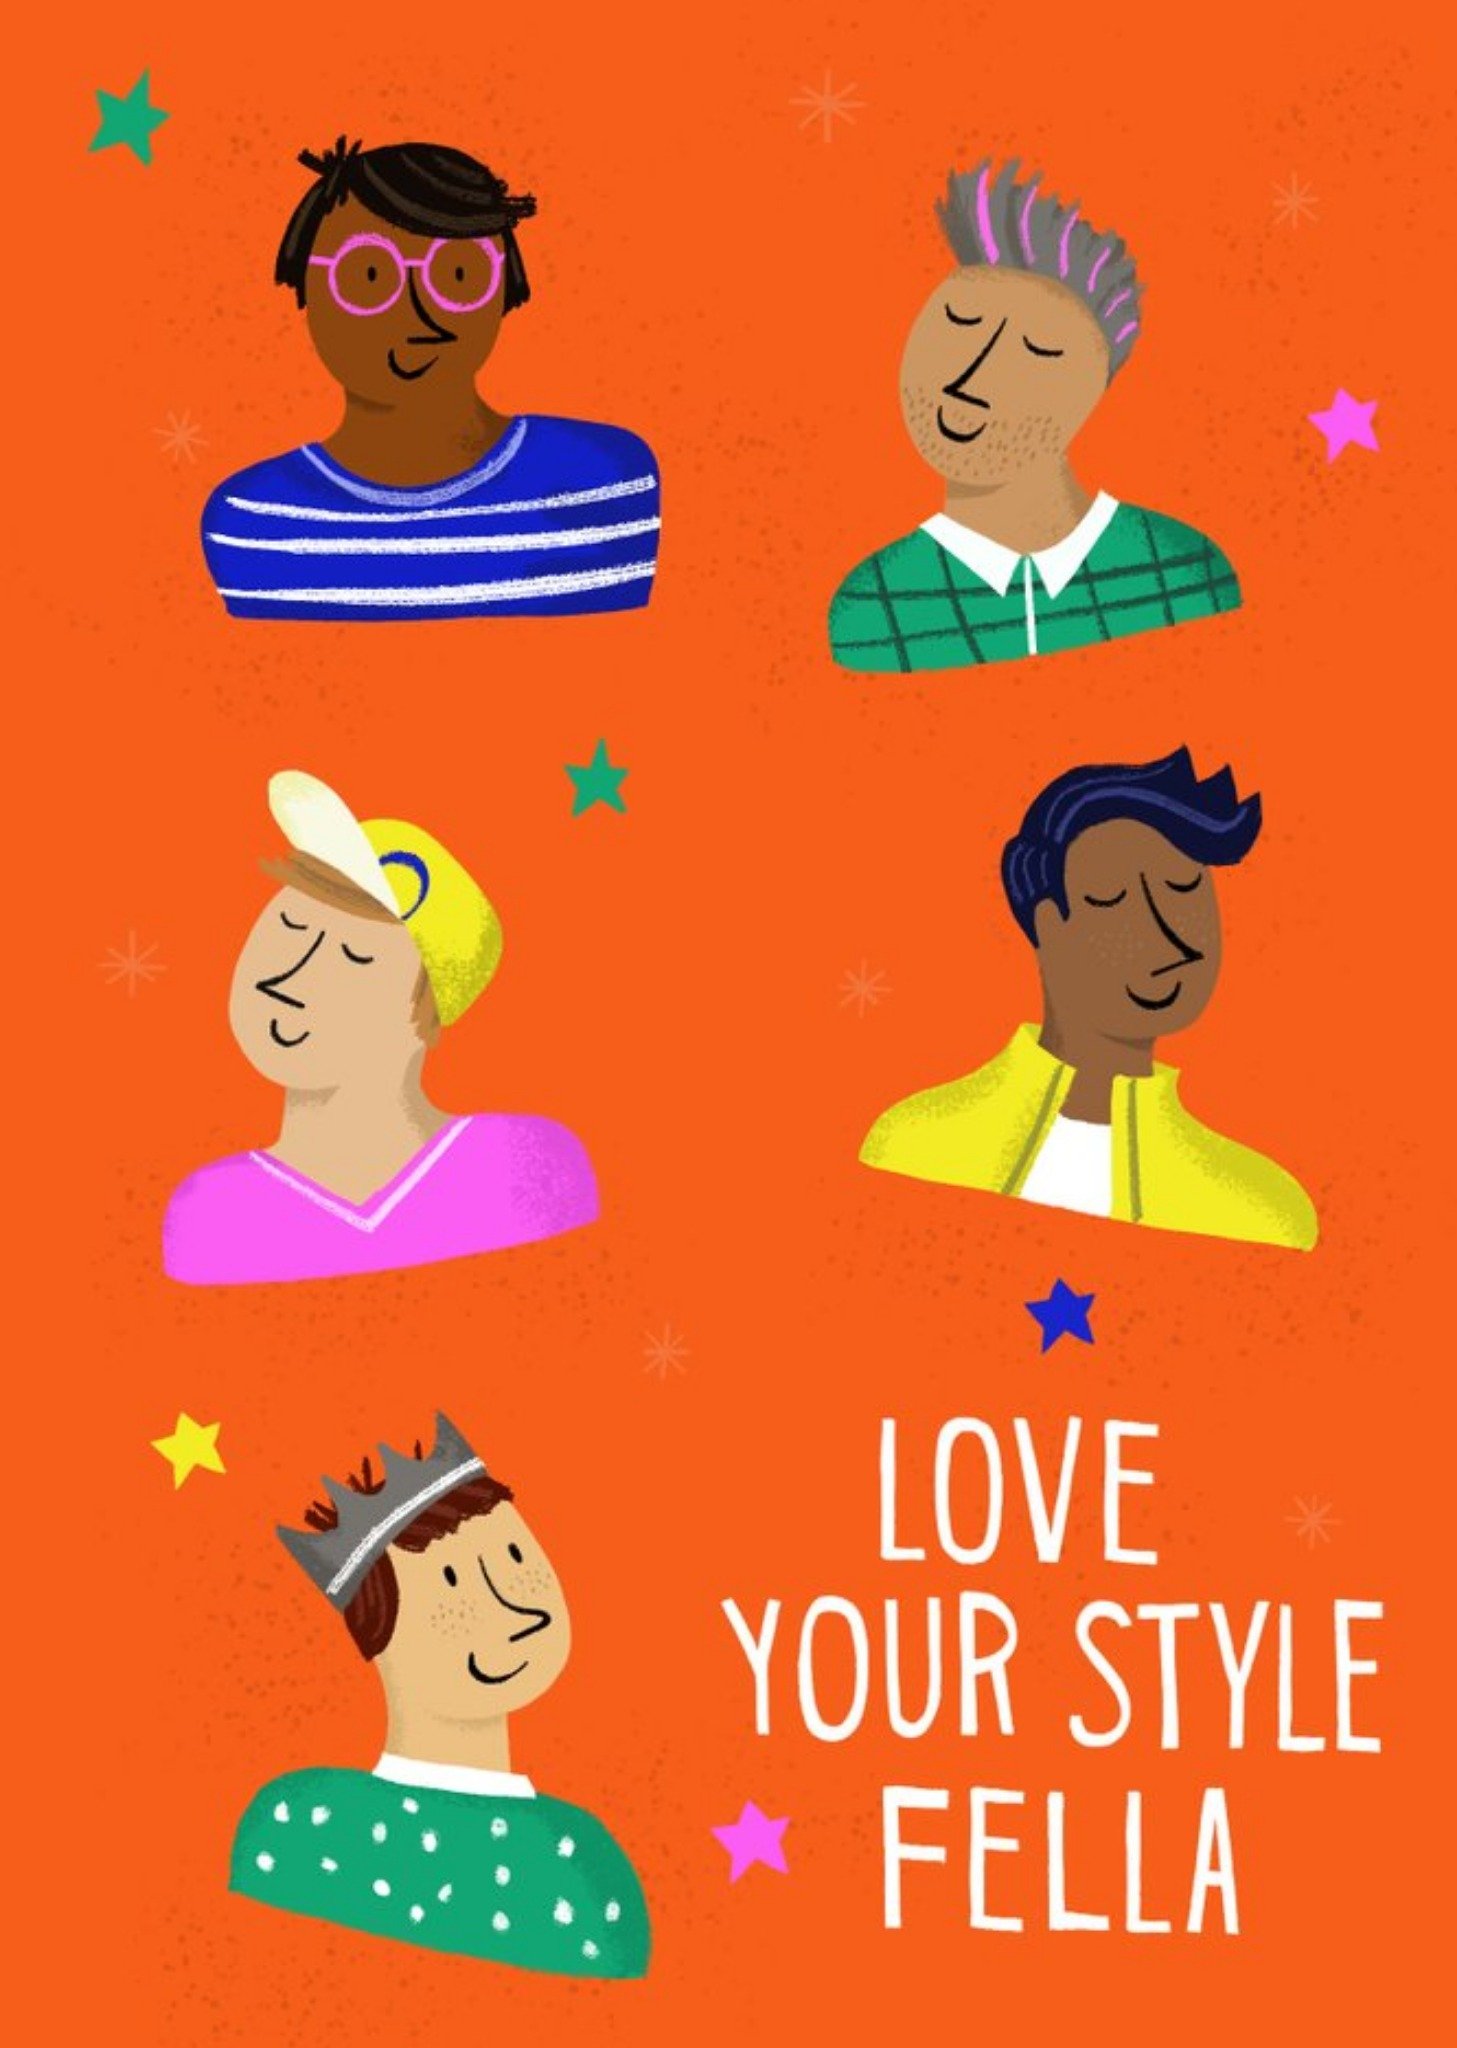 Moonpig Sinead Hanley Illustrated Diverse Men Love Your Style Fella Card Ecard